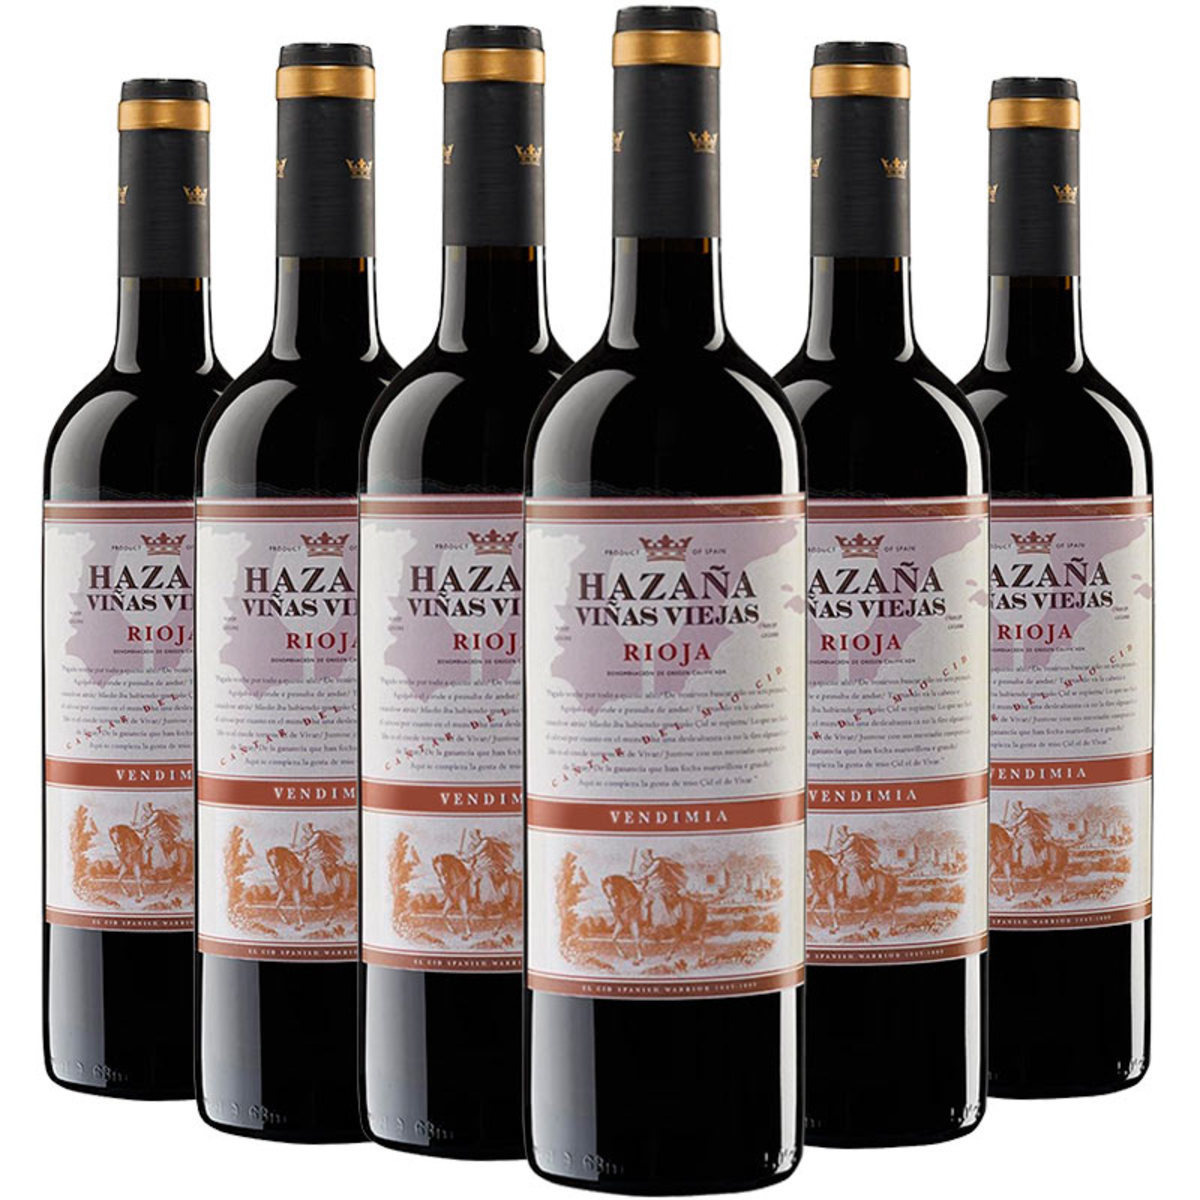 Hazana Vinas Viejas Rioja 2015, 6 x 75cl